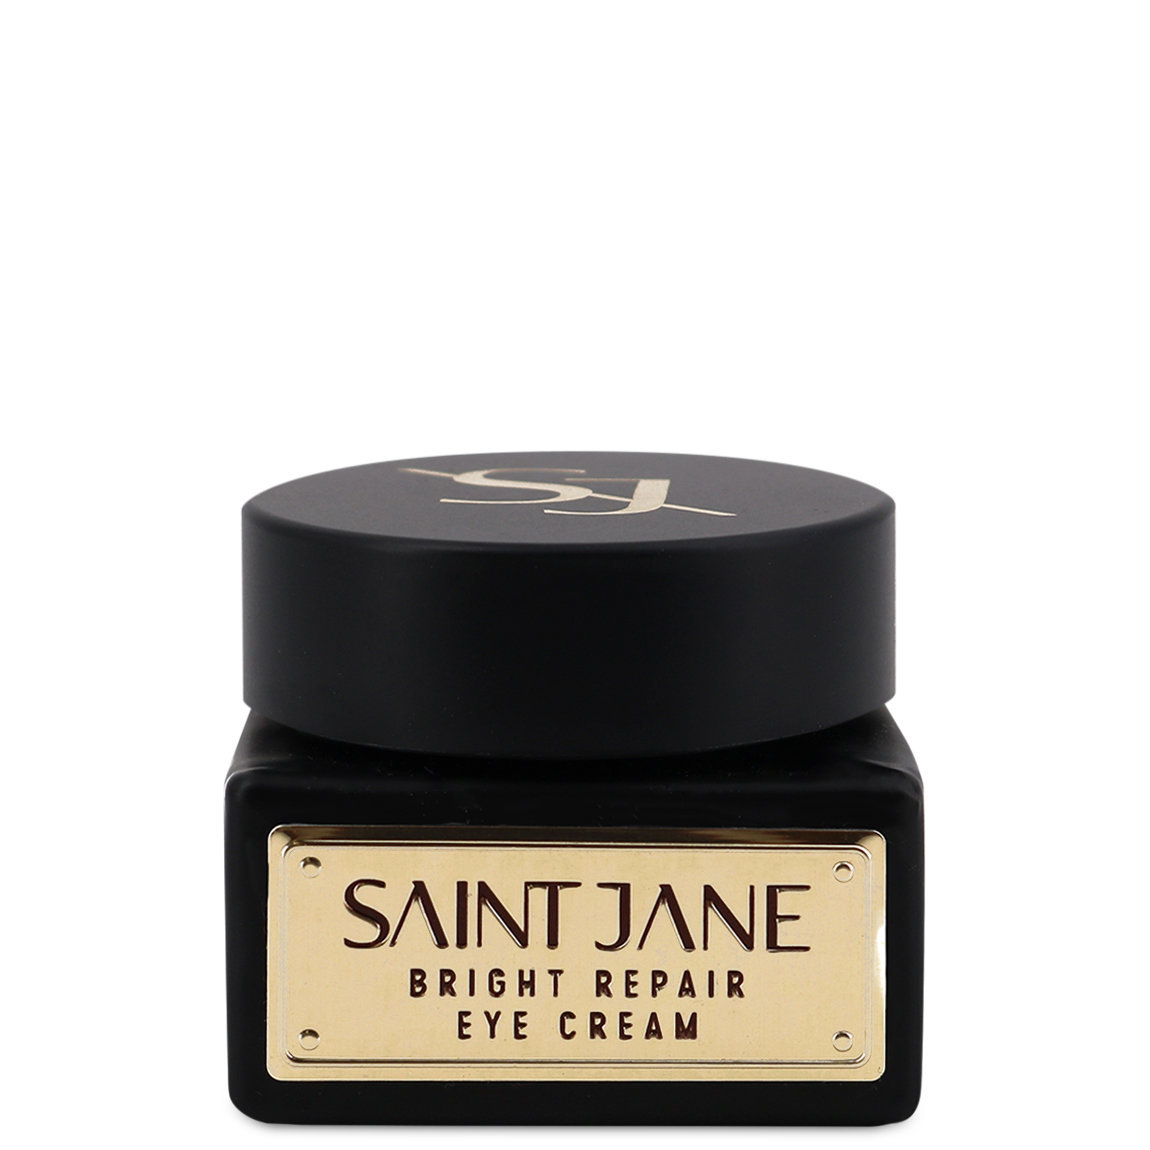 Saint Jane Beauty Bright Repair Eye Cream alternative view 1 - product swatch.